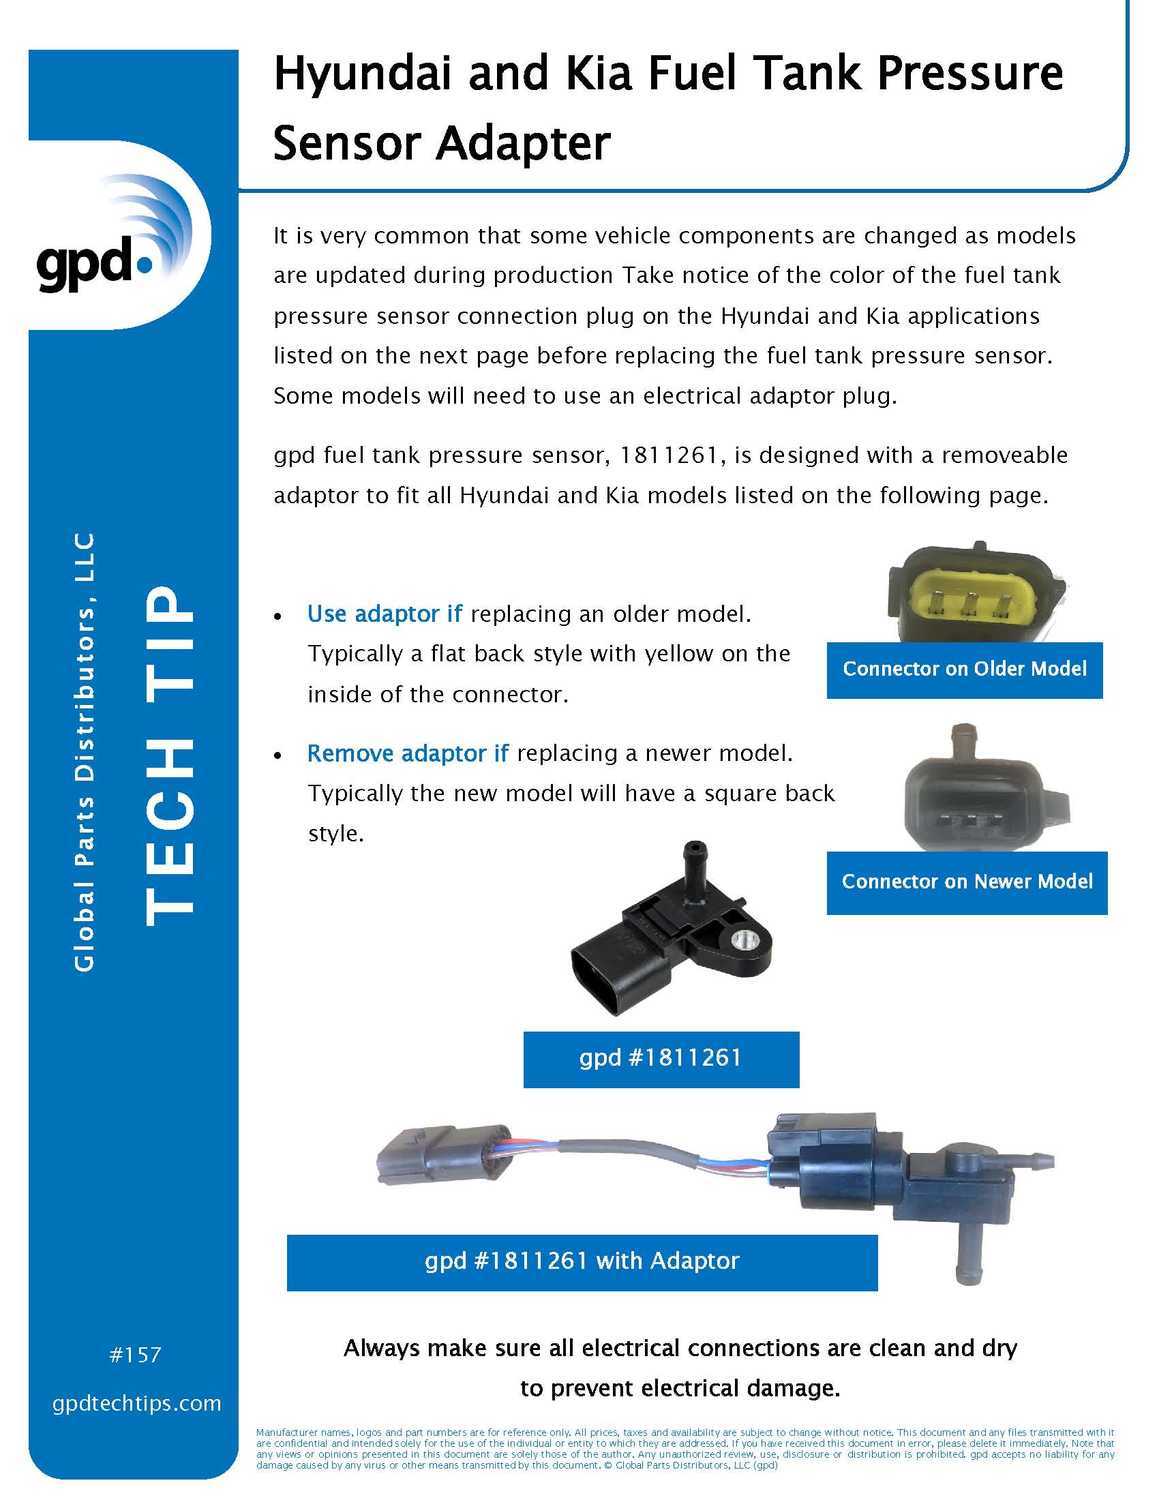 GLOBAL PARTS - Fuel Tank Pressure Sensor - GBP 1811261